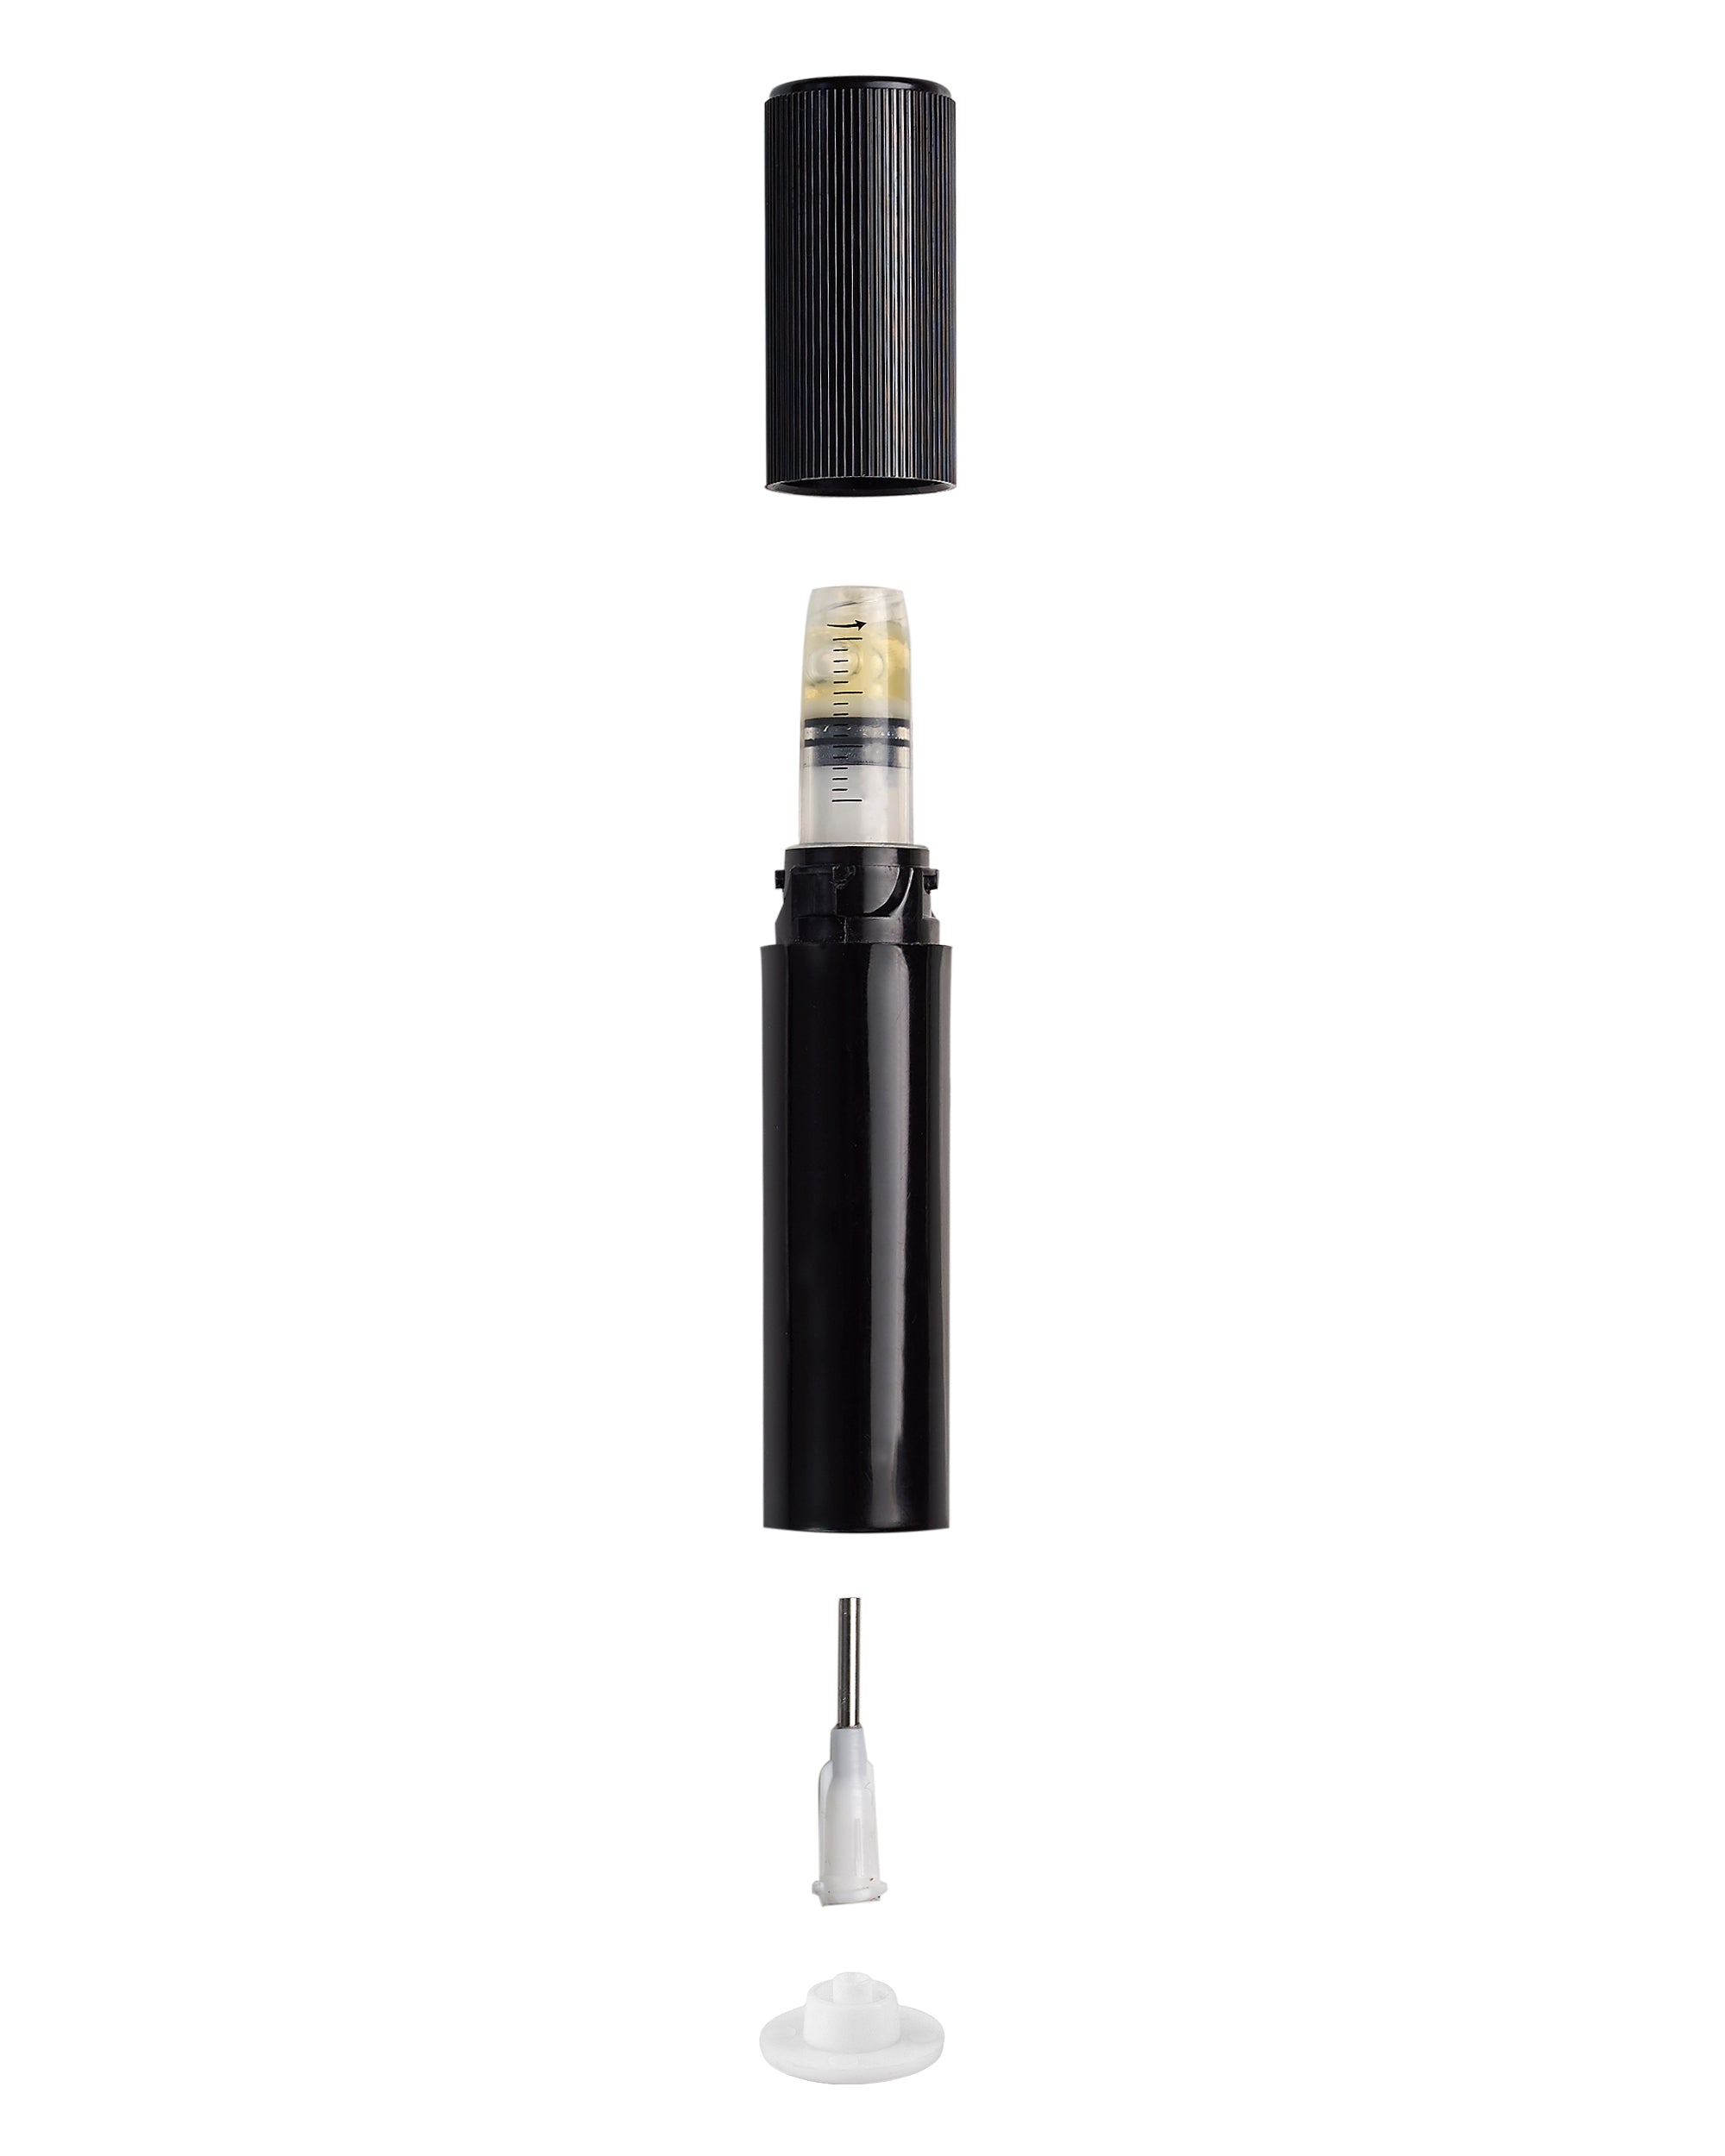 Child Resistant & Luer Lock | DymaPak Twistspenser Black Plastic Dab Applicator Syringes | 1mL - 0.33mL Increments - 1